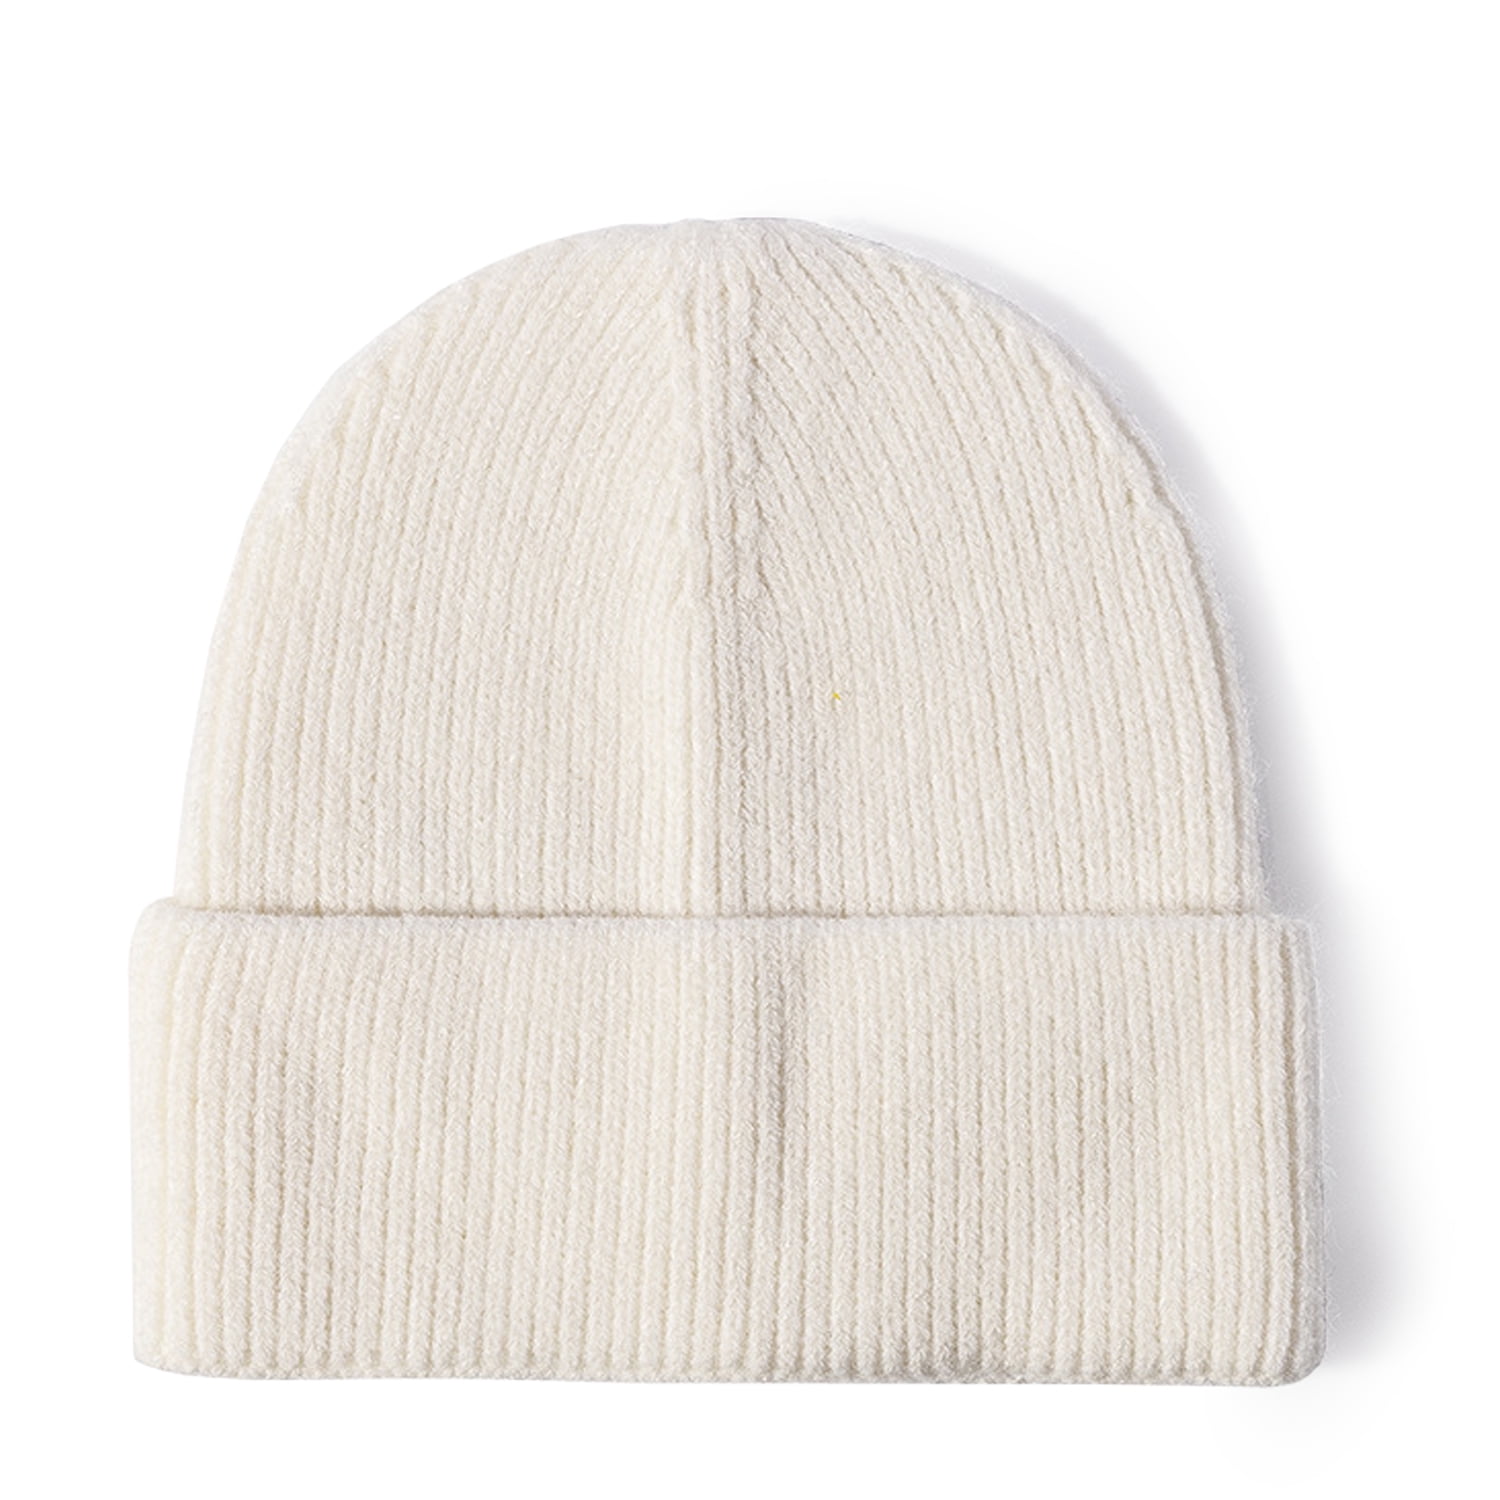 Baseball Logo Men&Women Warm Winter Knit Plain Beanie Hat Skull Cap Acrylic Knit Cuff Hat 